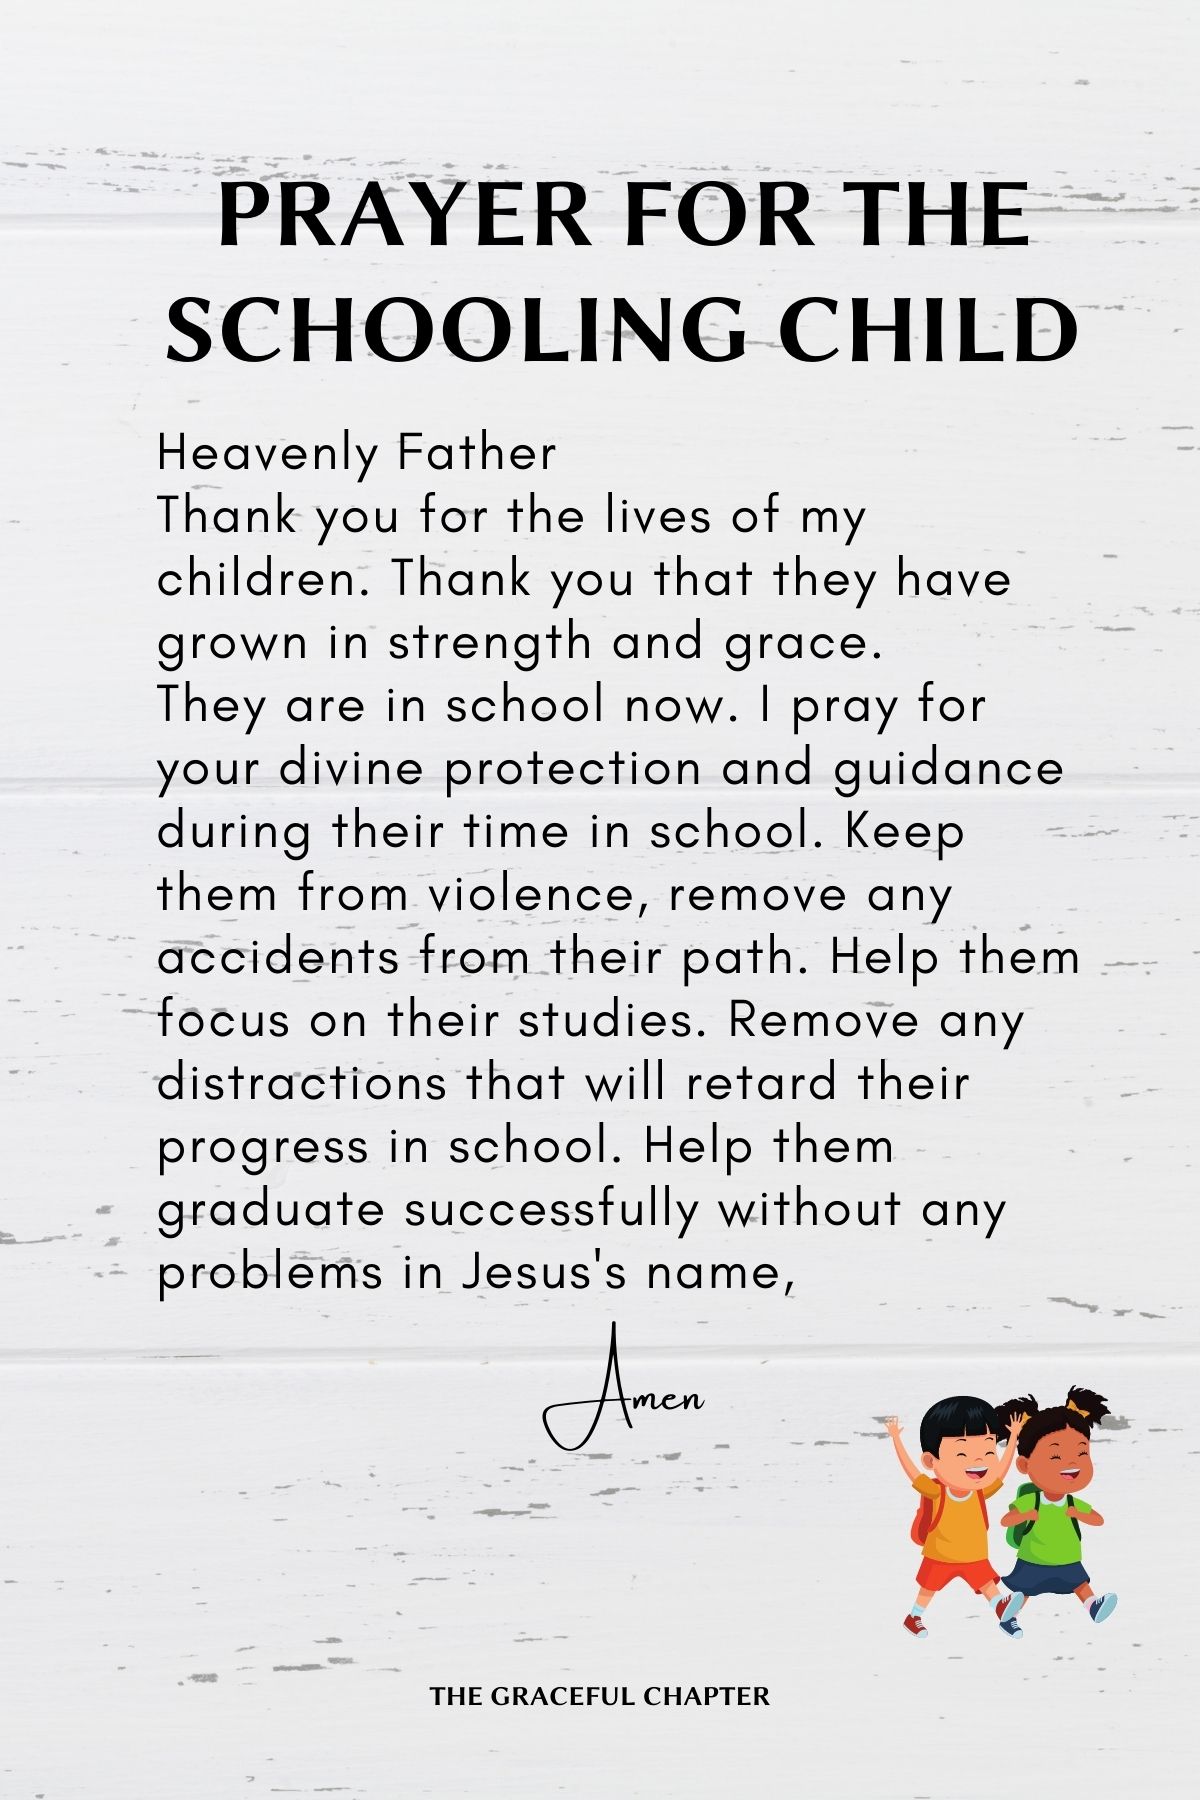 Prayer for the schooling child